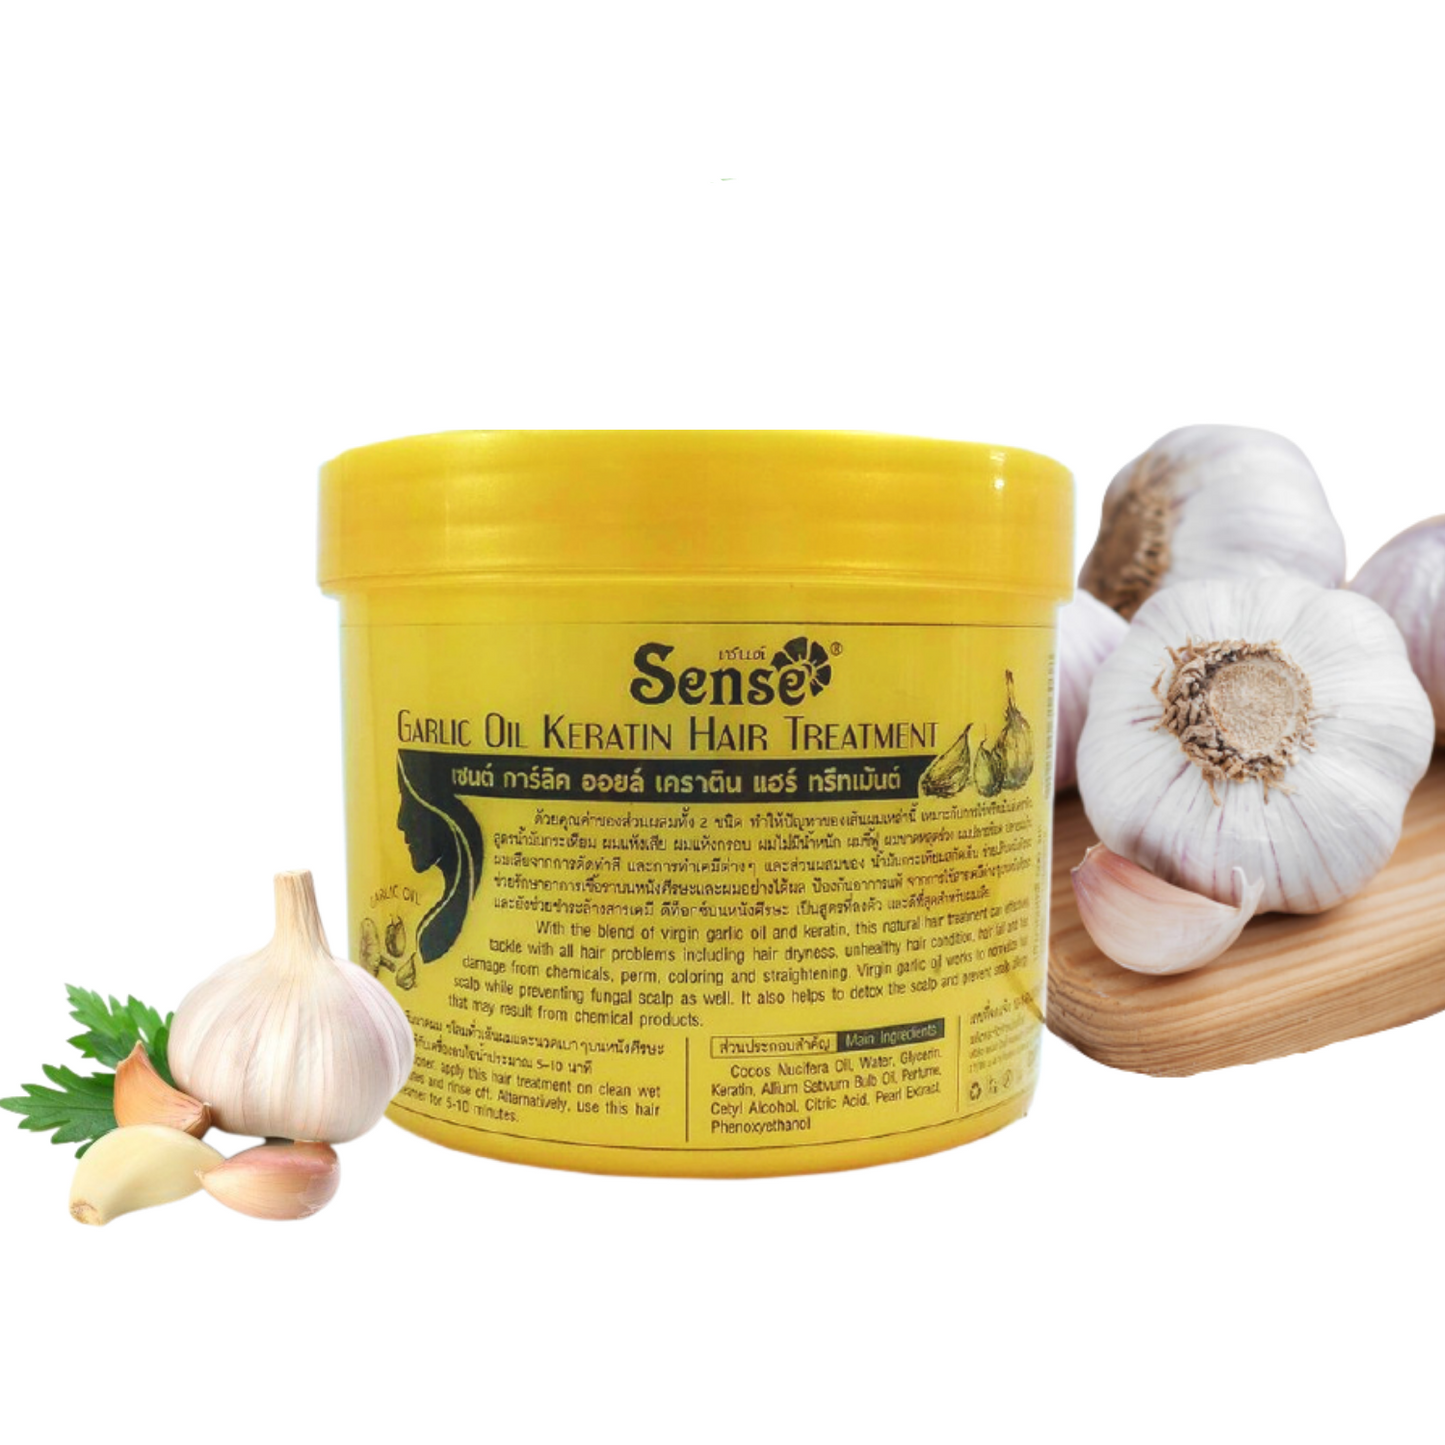 Sense Garlic Oil Keratin Hair Treatment, 500g